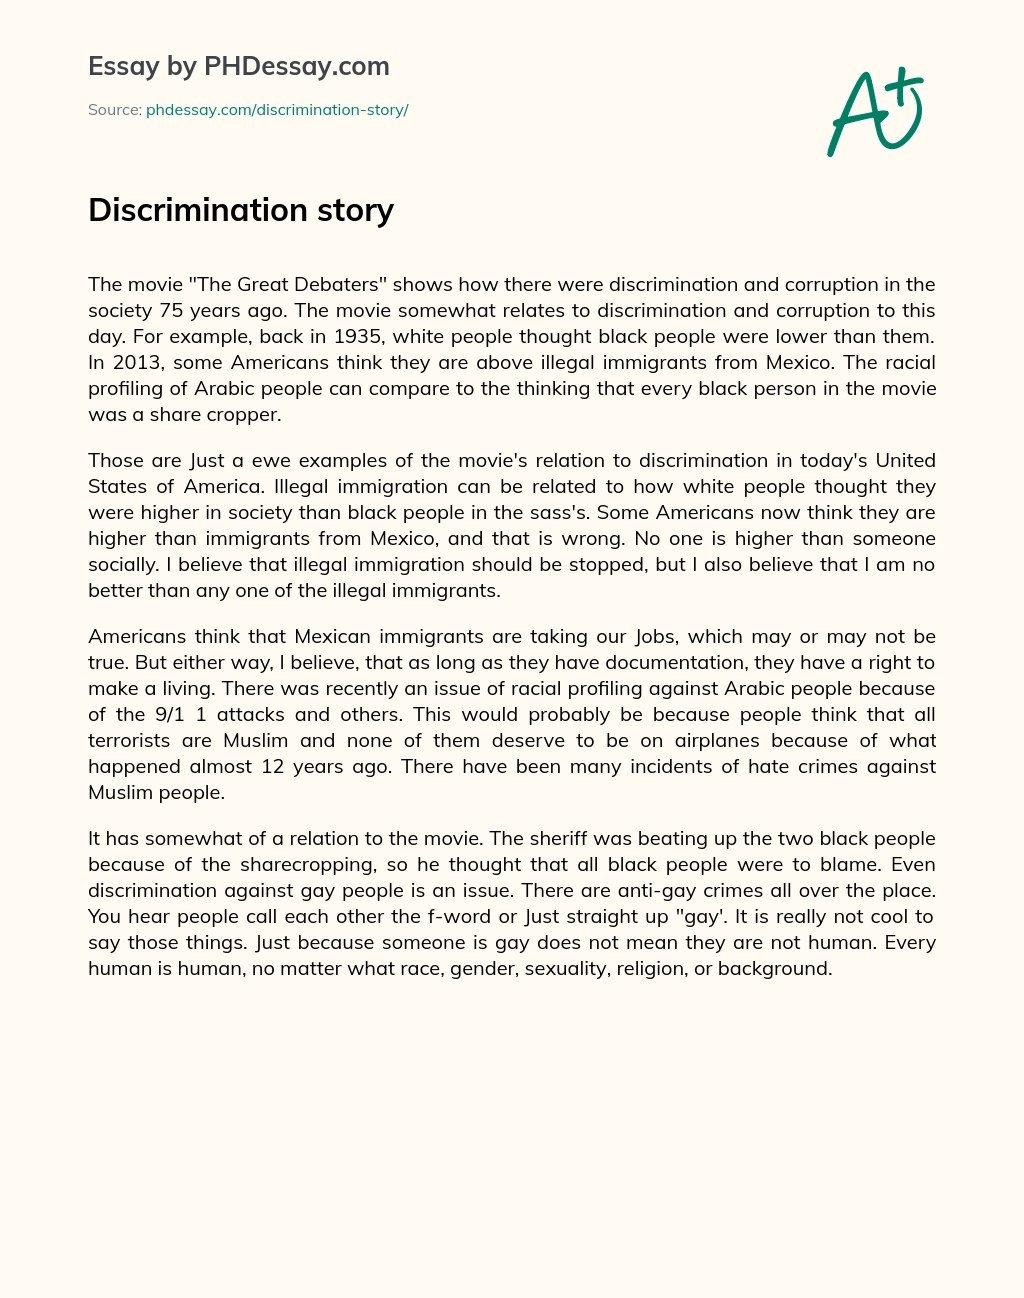 Discrimination story essay